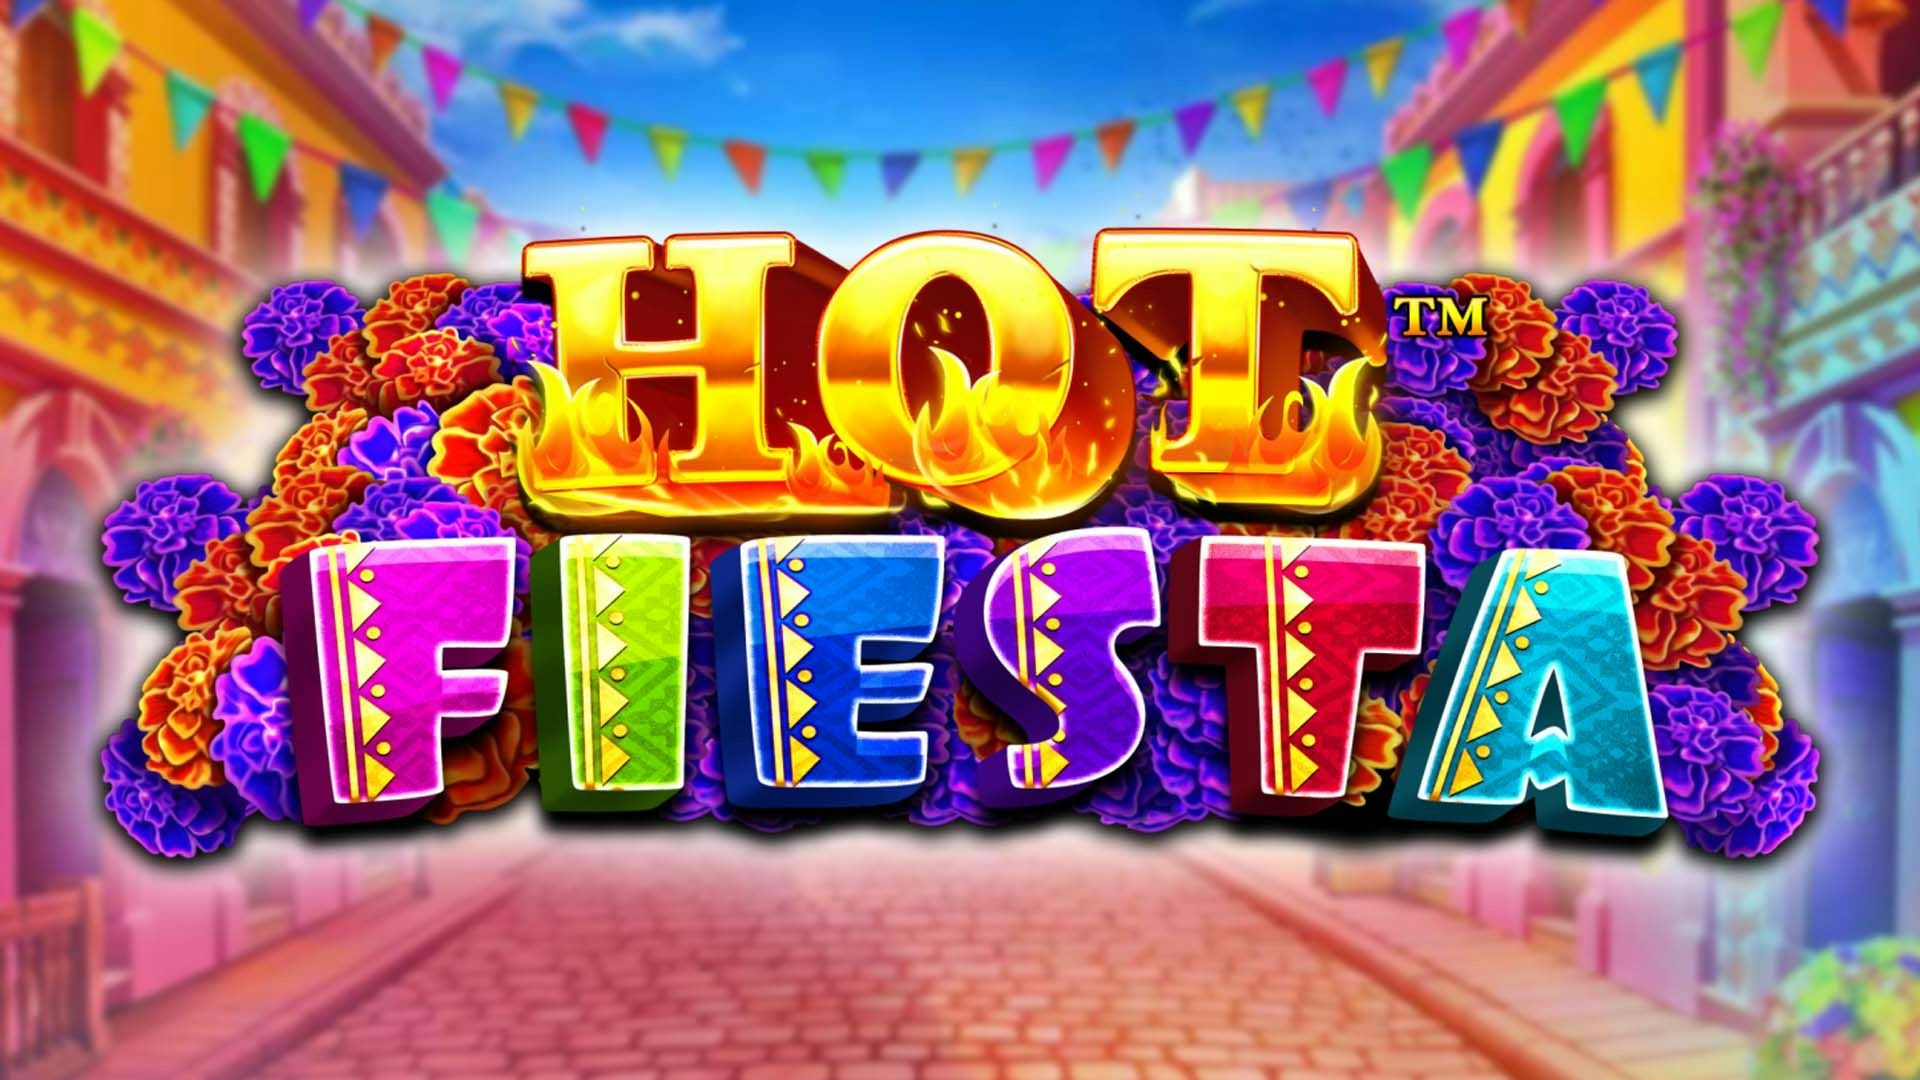 Hot Fiesta